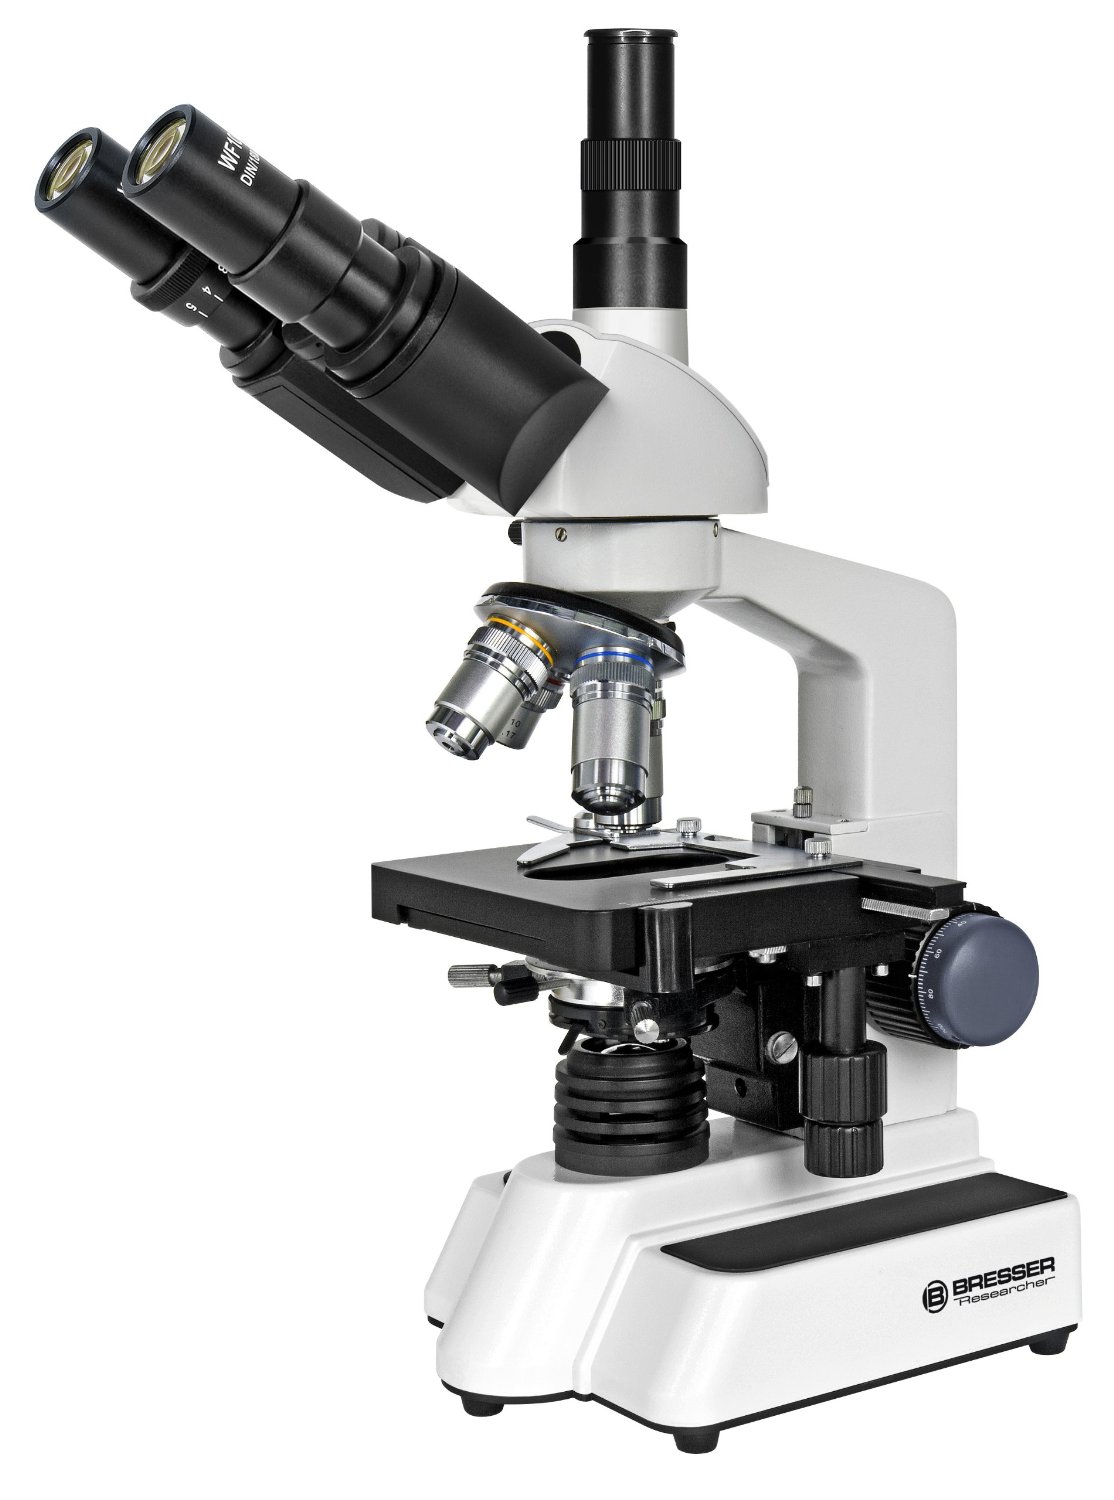 Bresser 5723100 Researcher Trino Mikroskop: unsere Bewertung